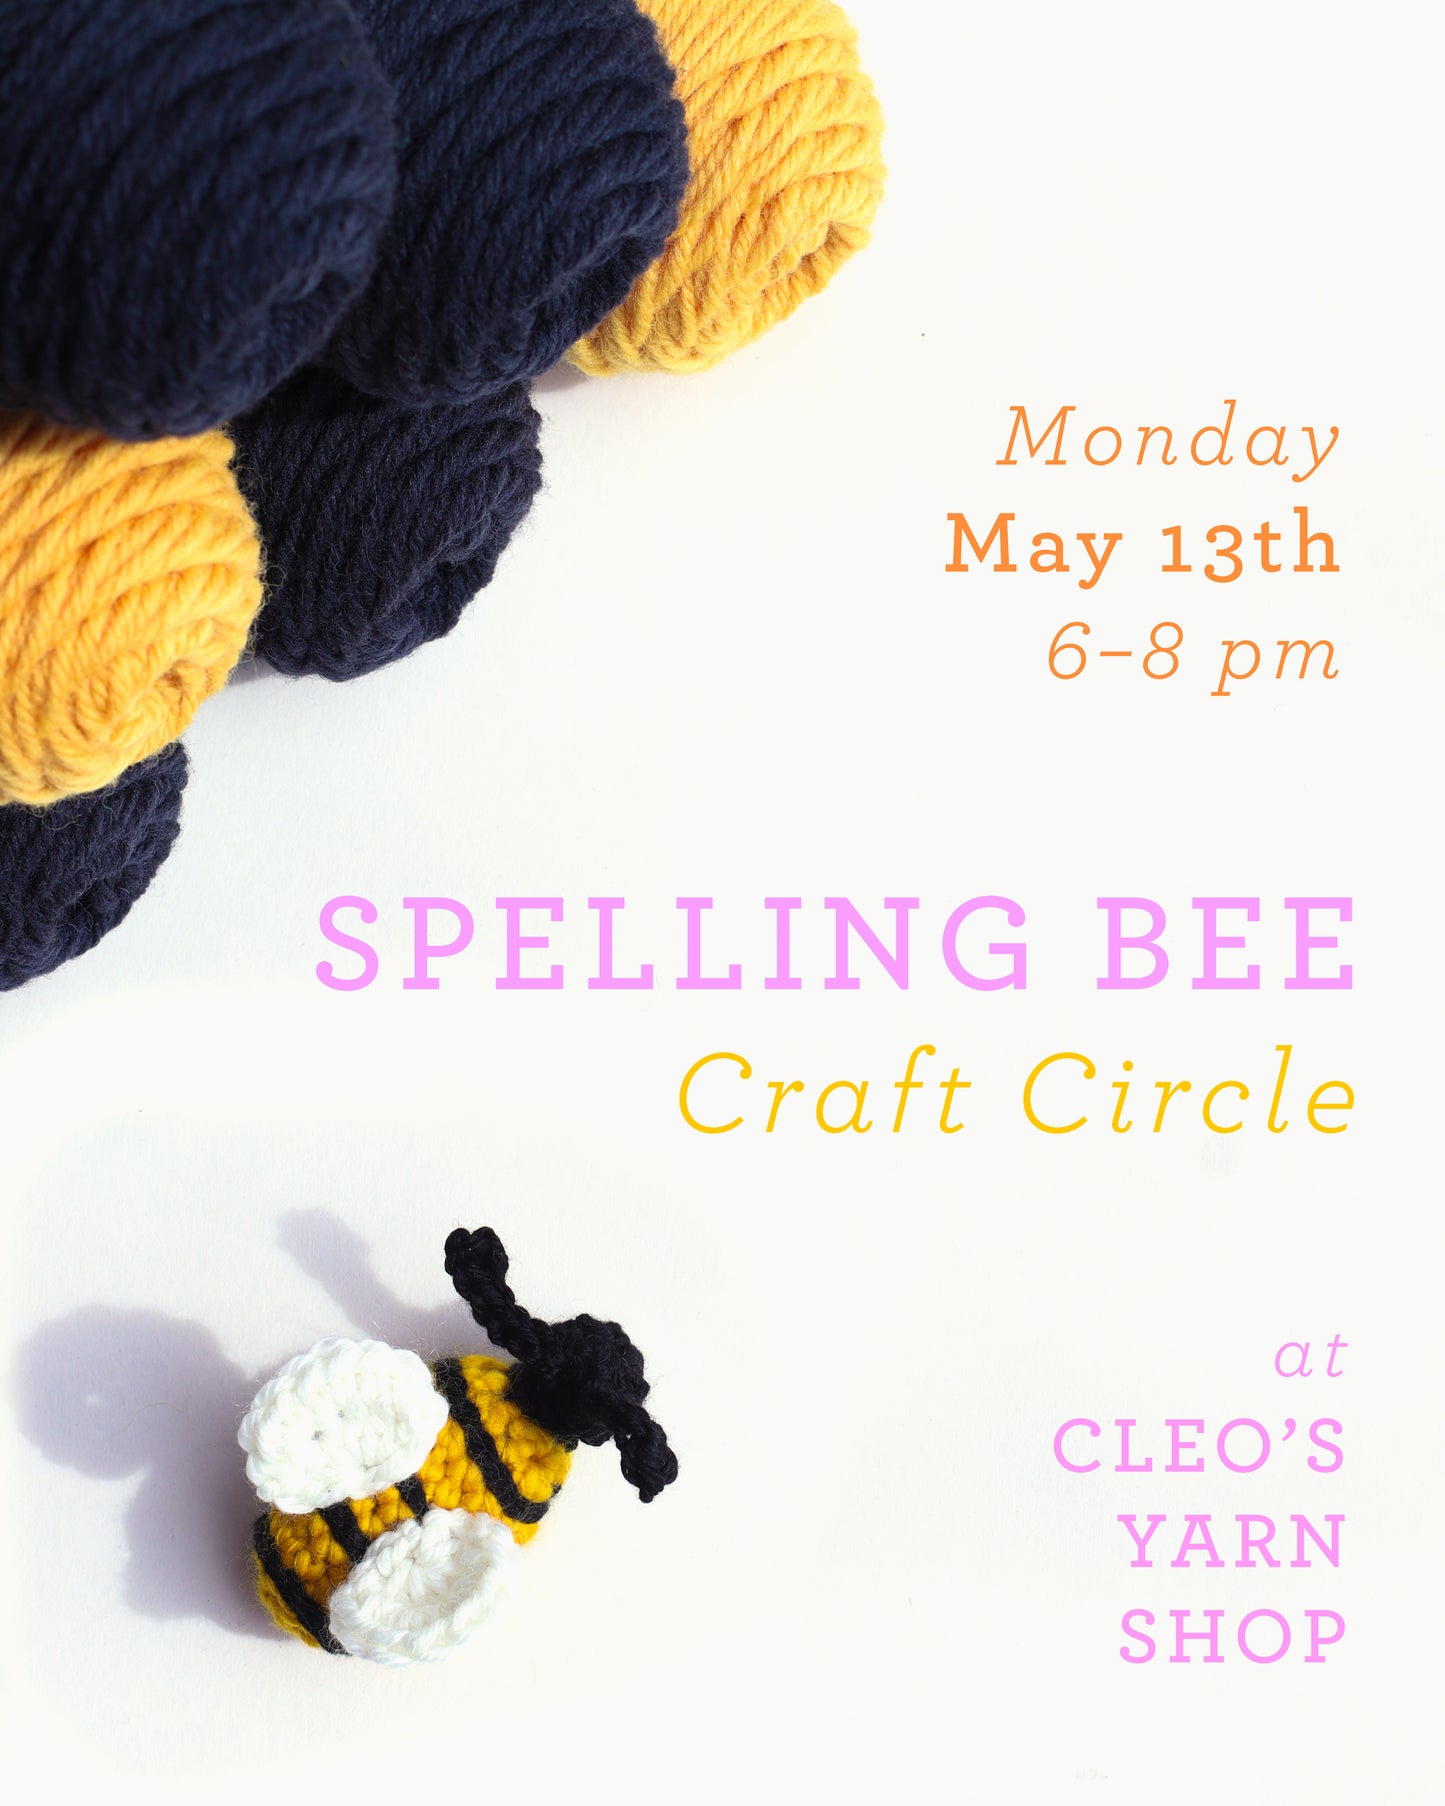 Spelling Bee Craft Circle